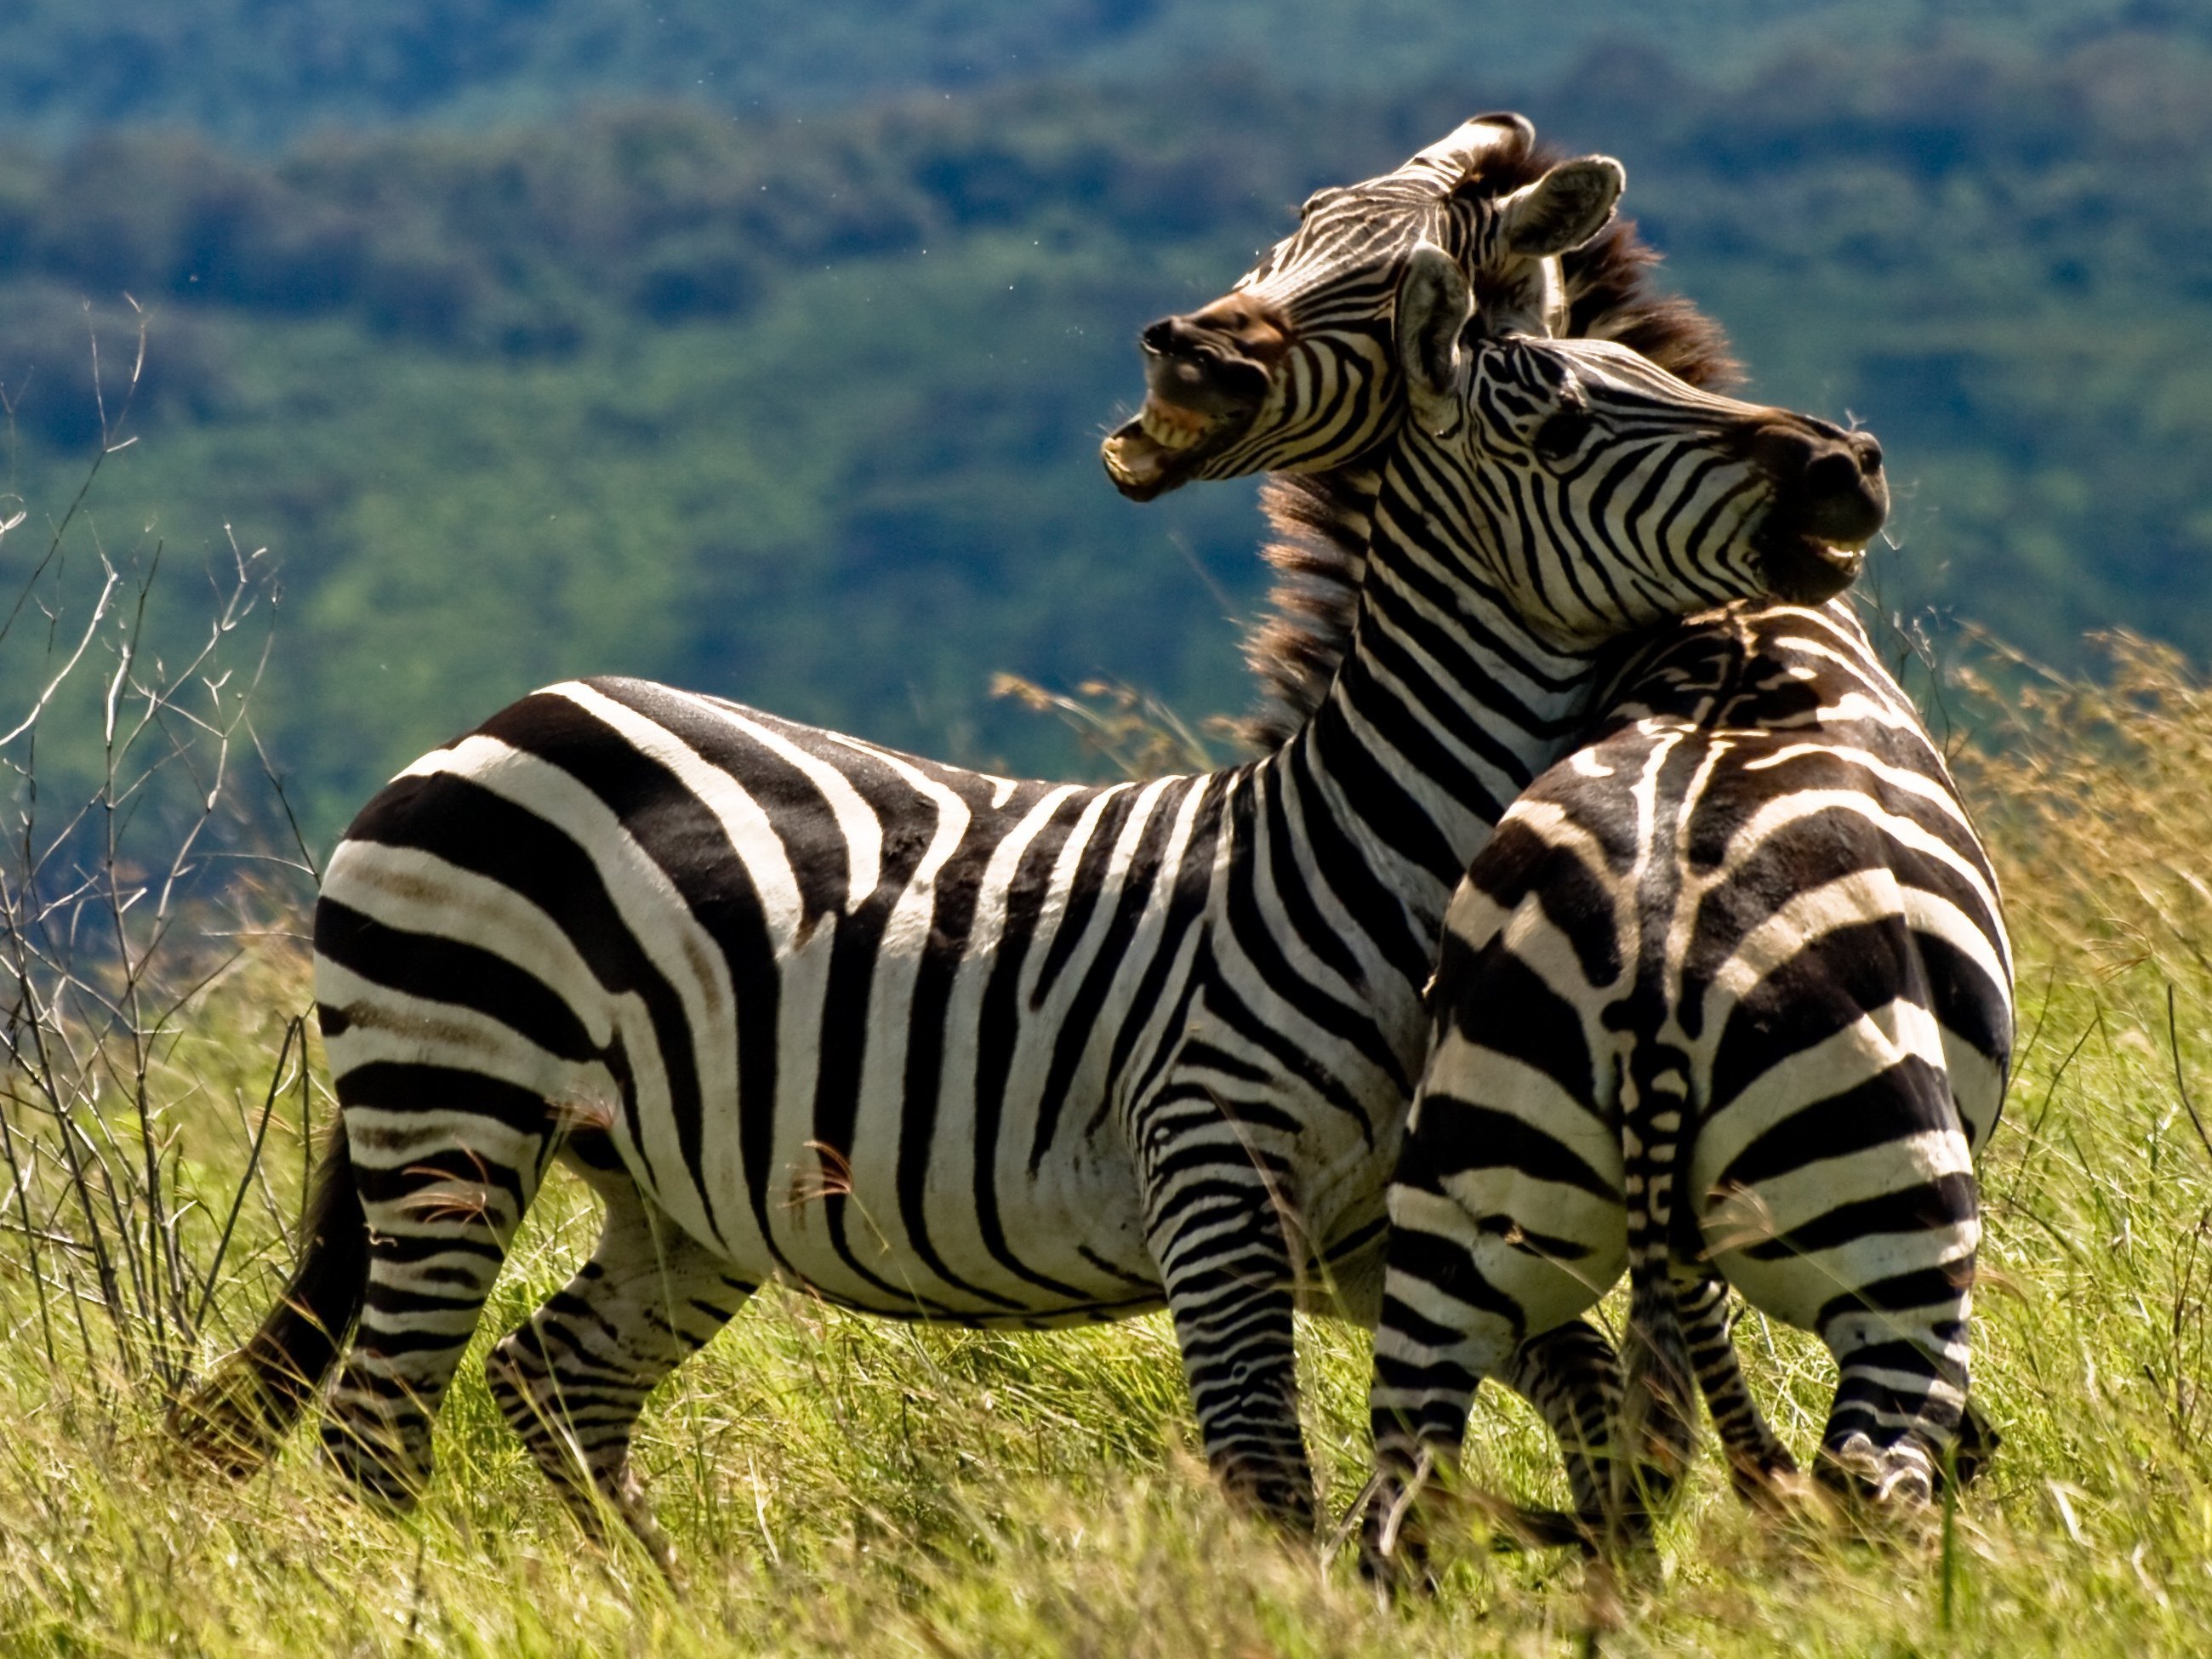 Duelling Zebras